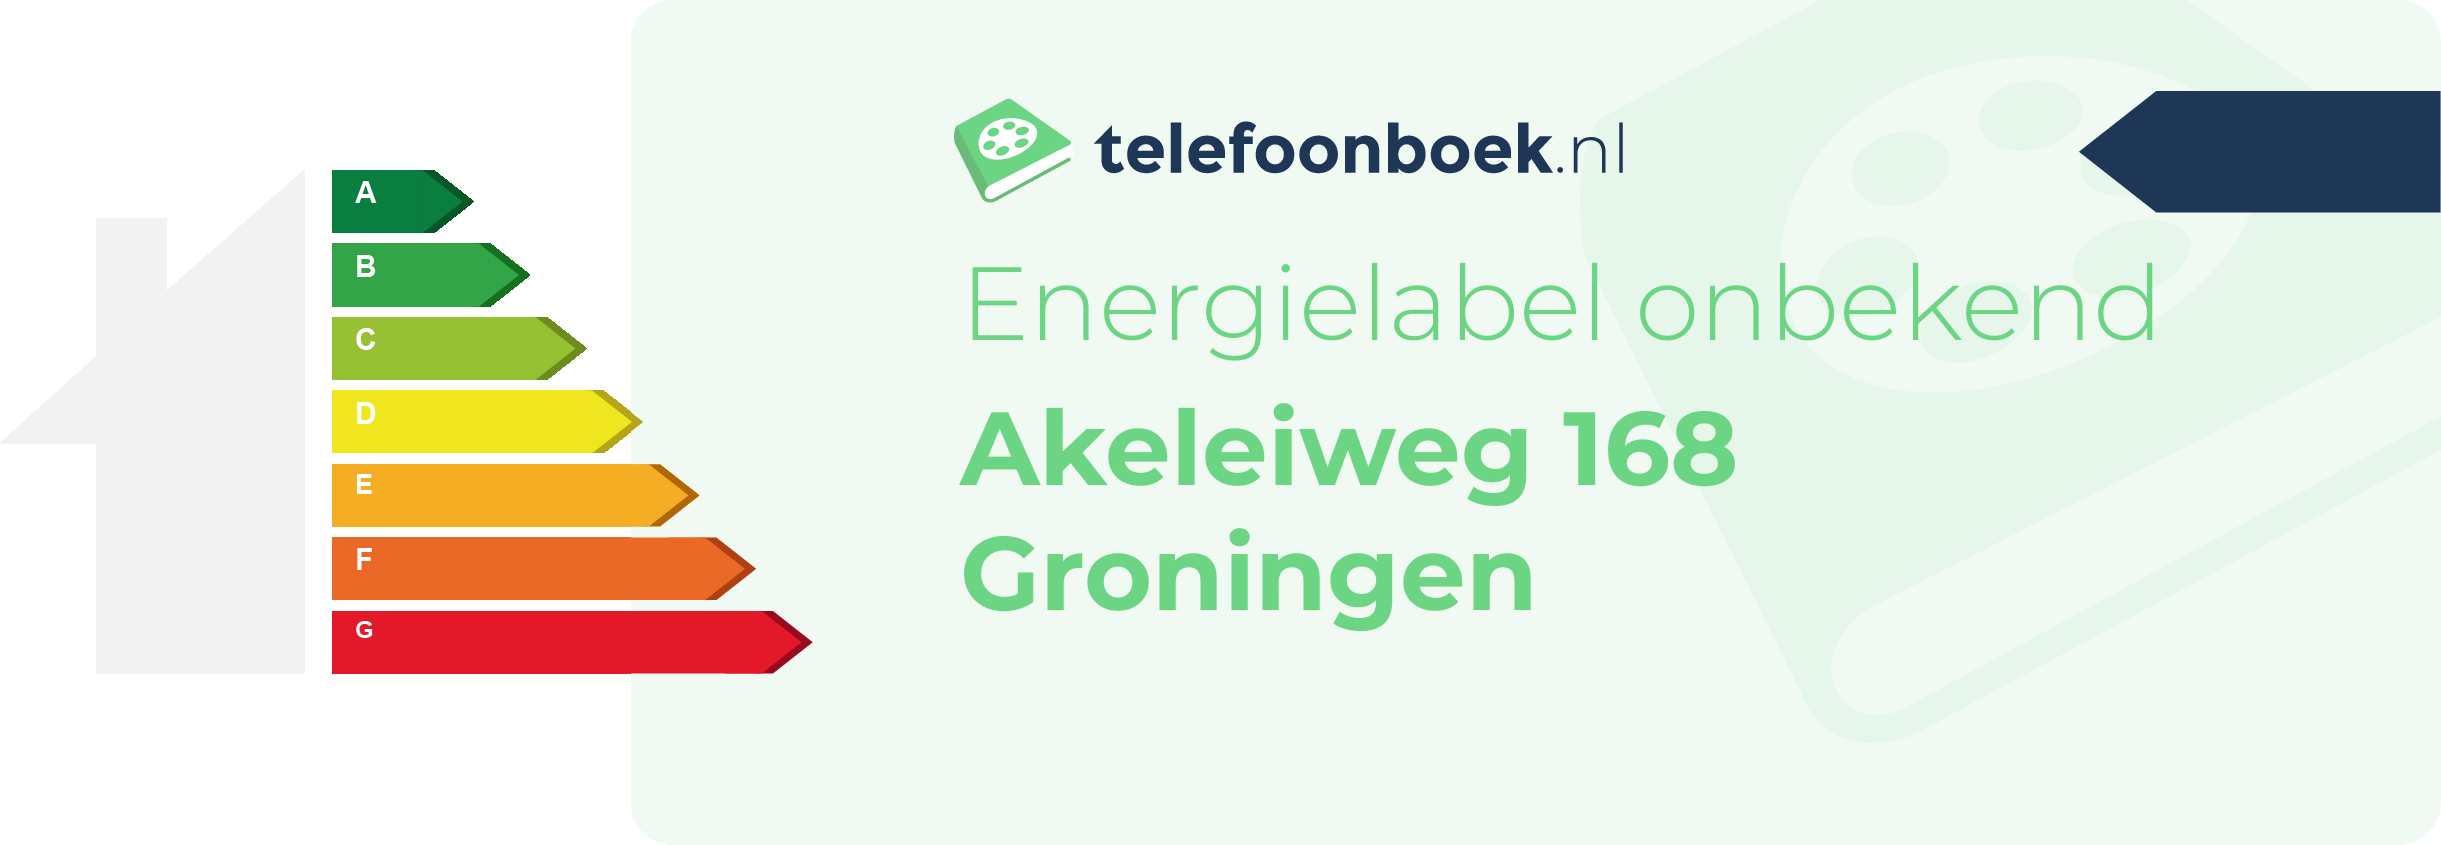 Energielabel Akeleiweg 168 Groningen